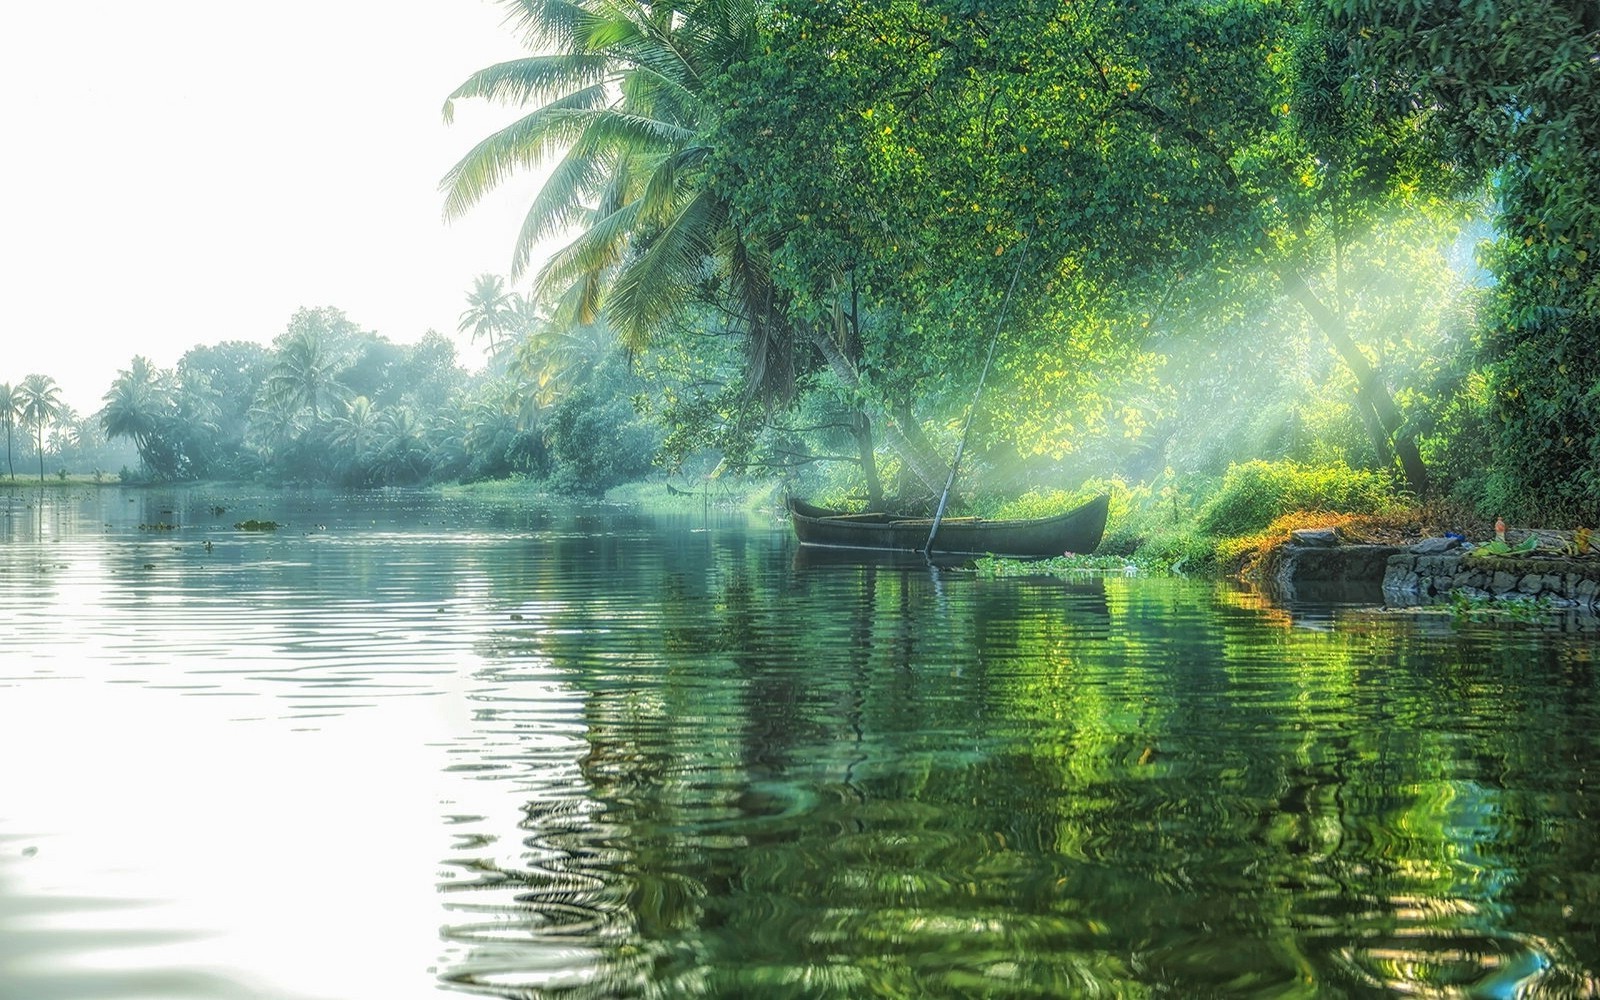 Landscape Nature Lake Sun Rays Boat Trees Palm Trees Mist Green